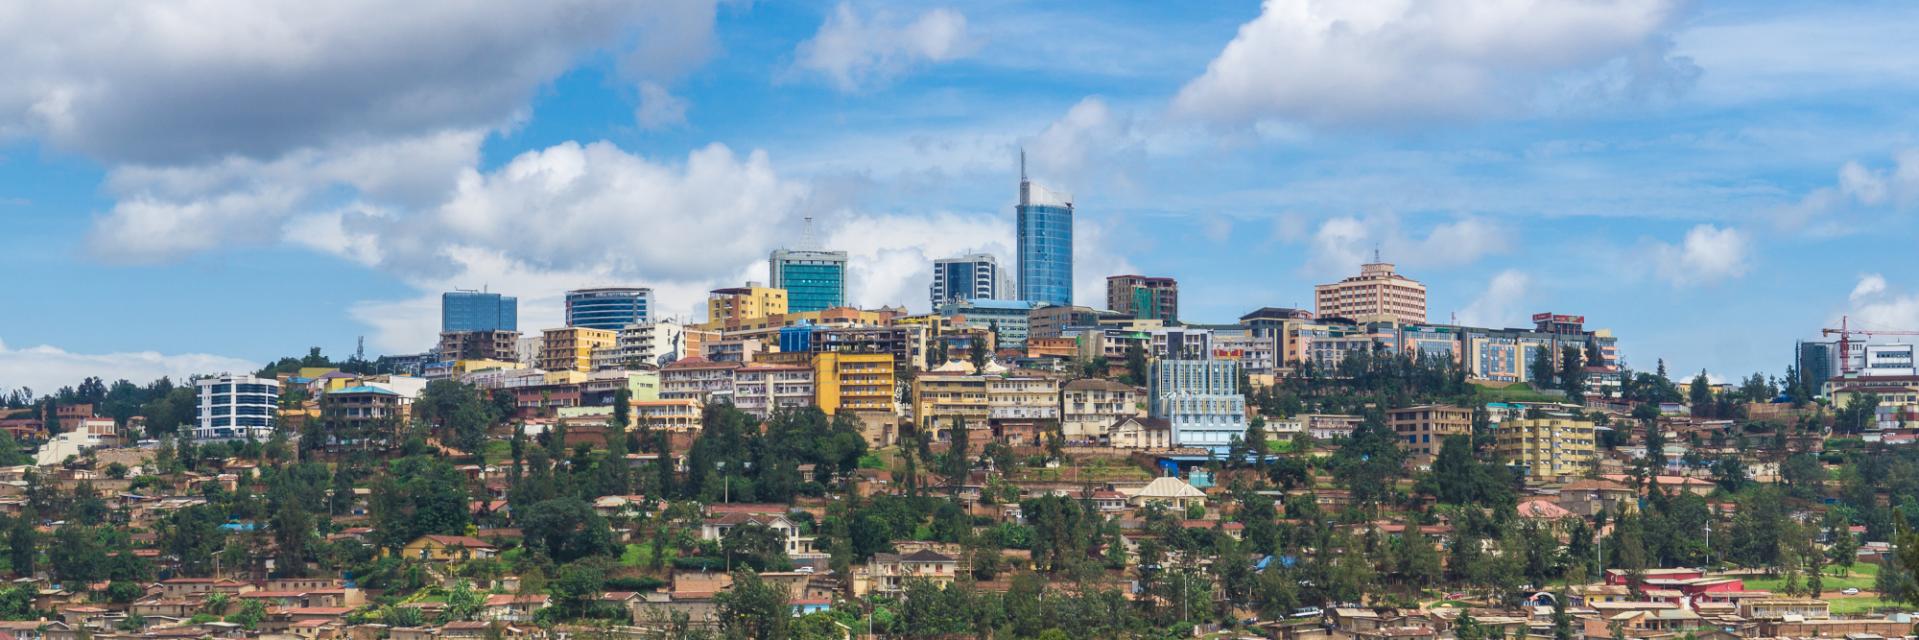 Expert Group Meeting of African registrar generals kicks off in Kigali, Rwanda